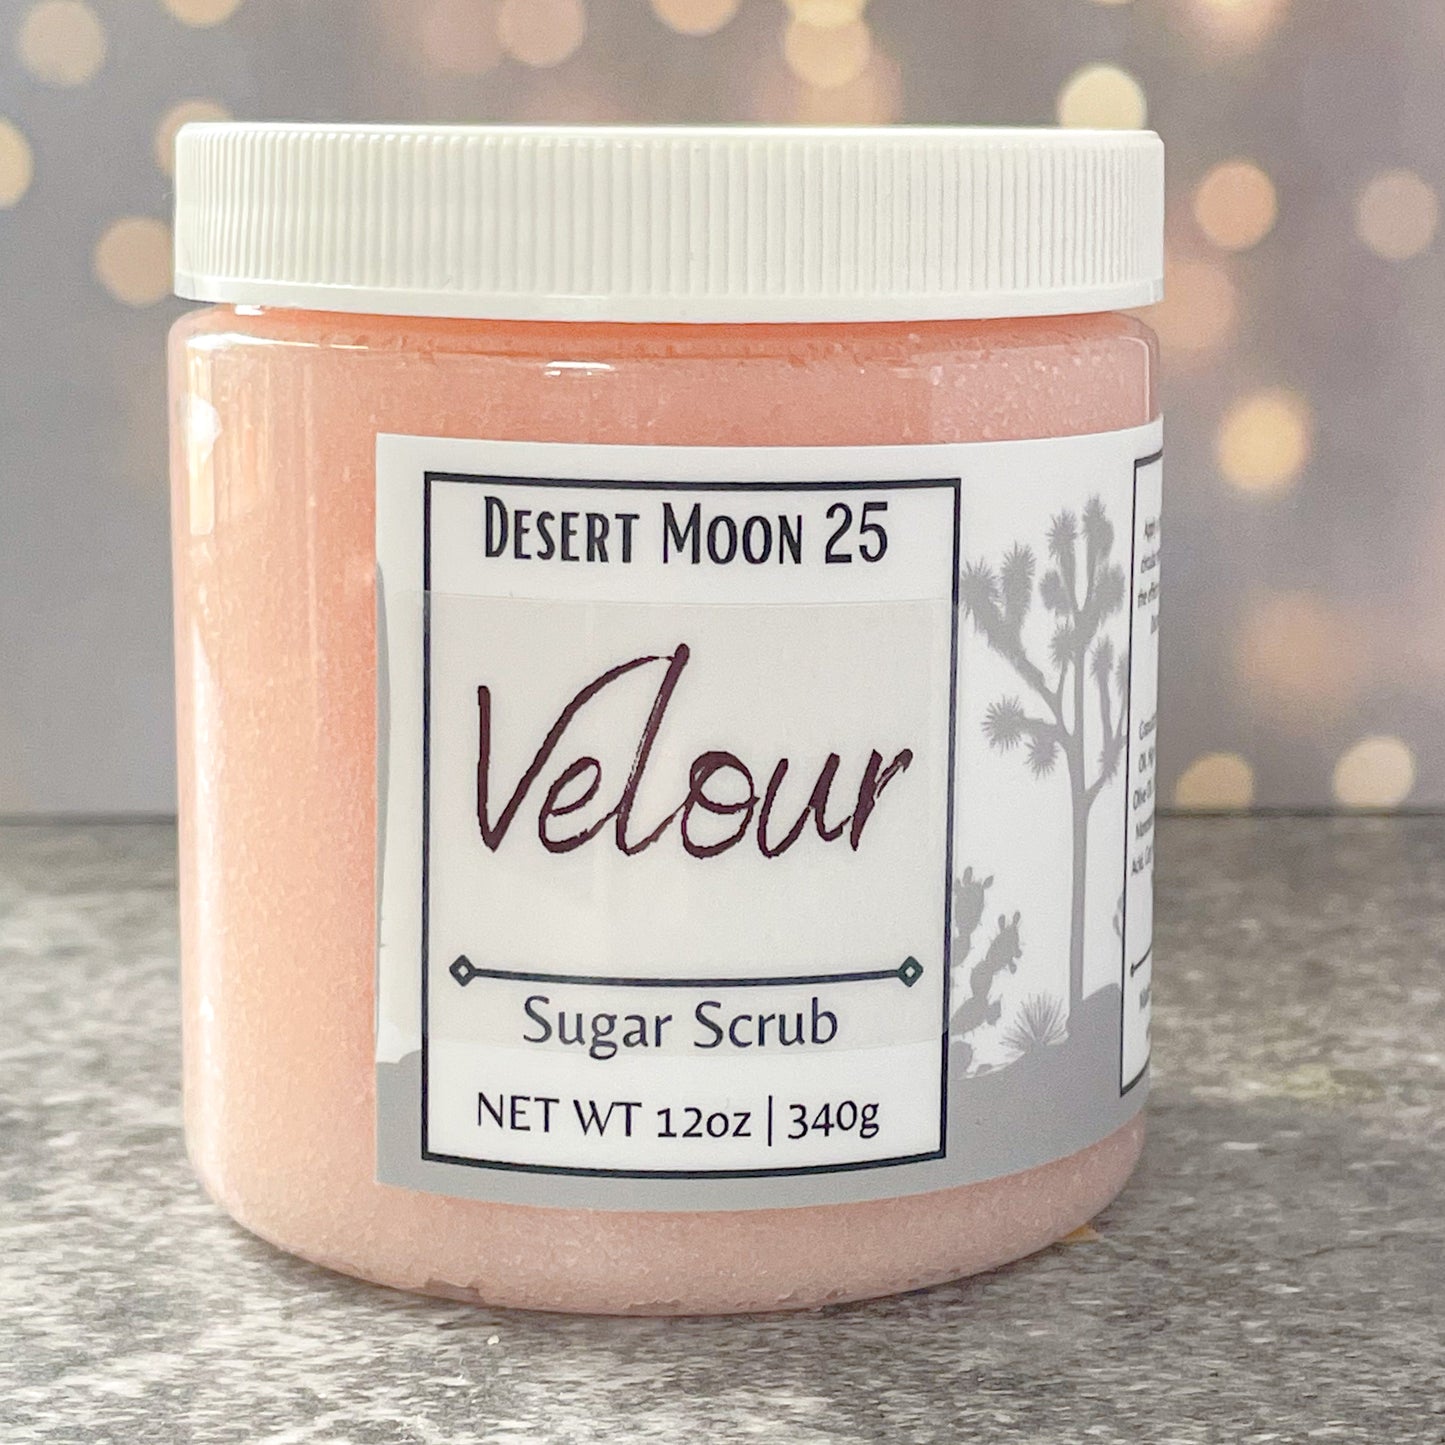 Velour Sugar Scrub - Desert Moon 25